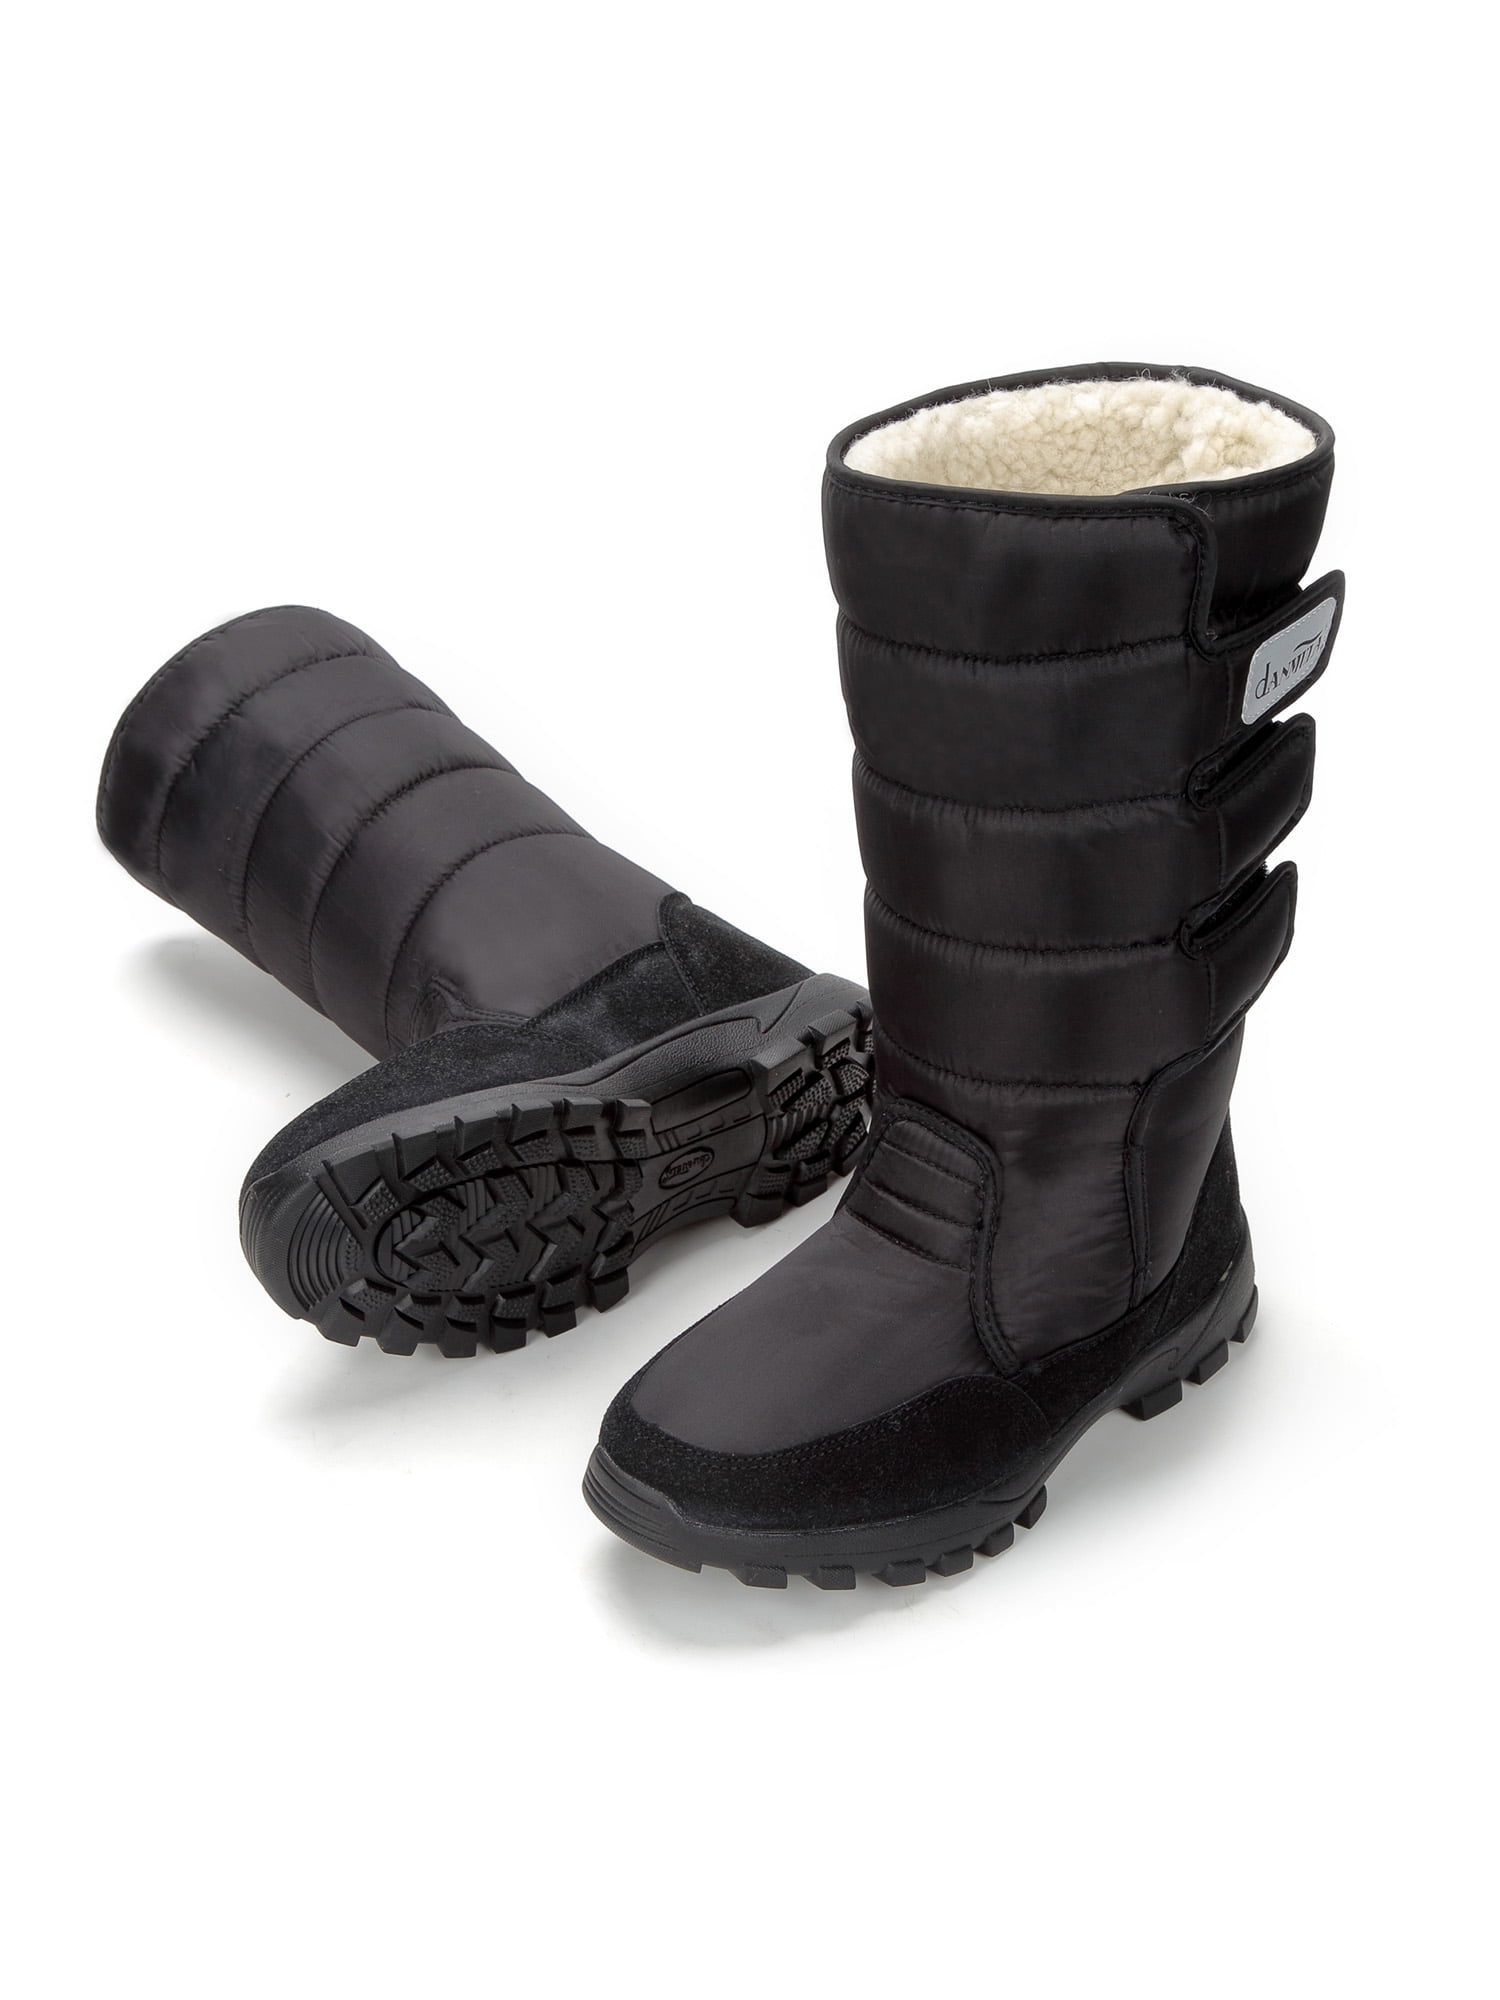 Mens Snug Buckle Boots Winter Warm Snow 